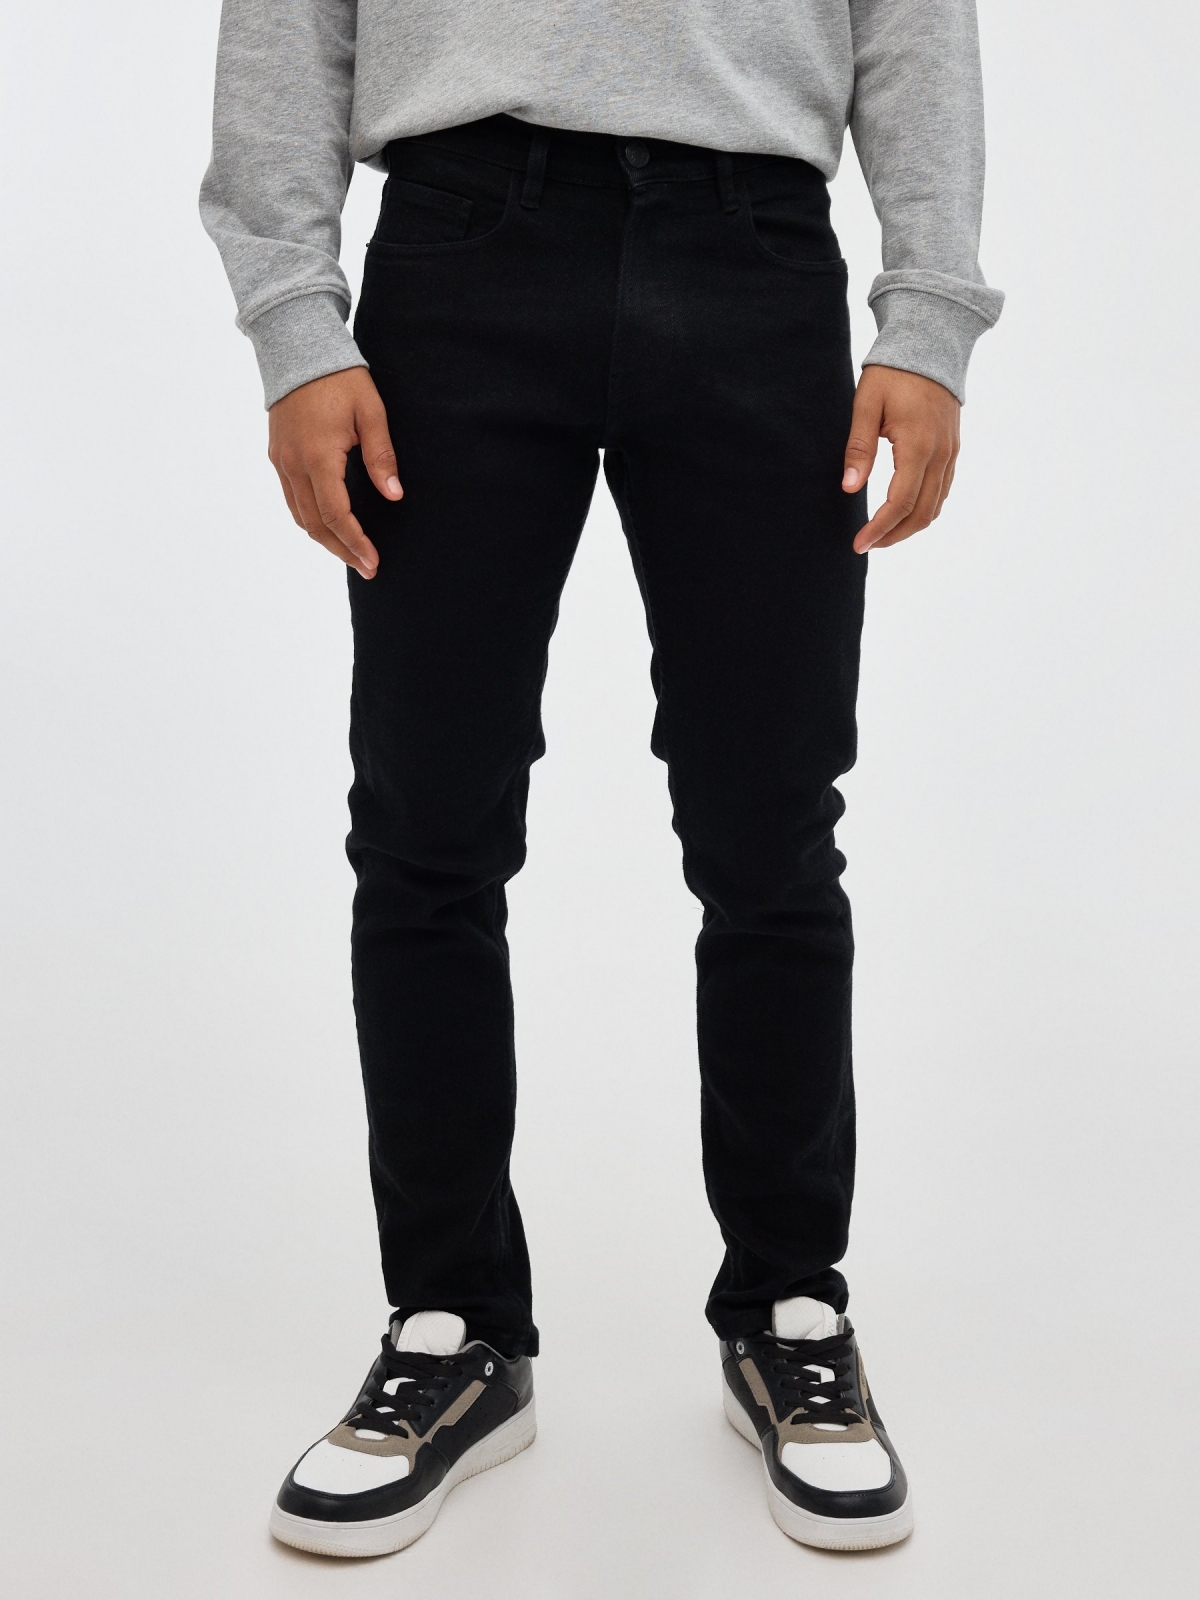 Black slim jeans black middle front view